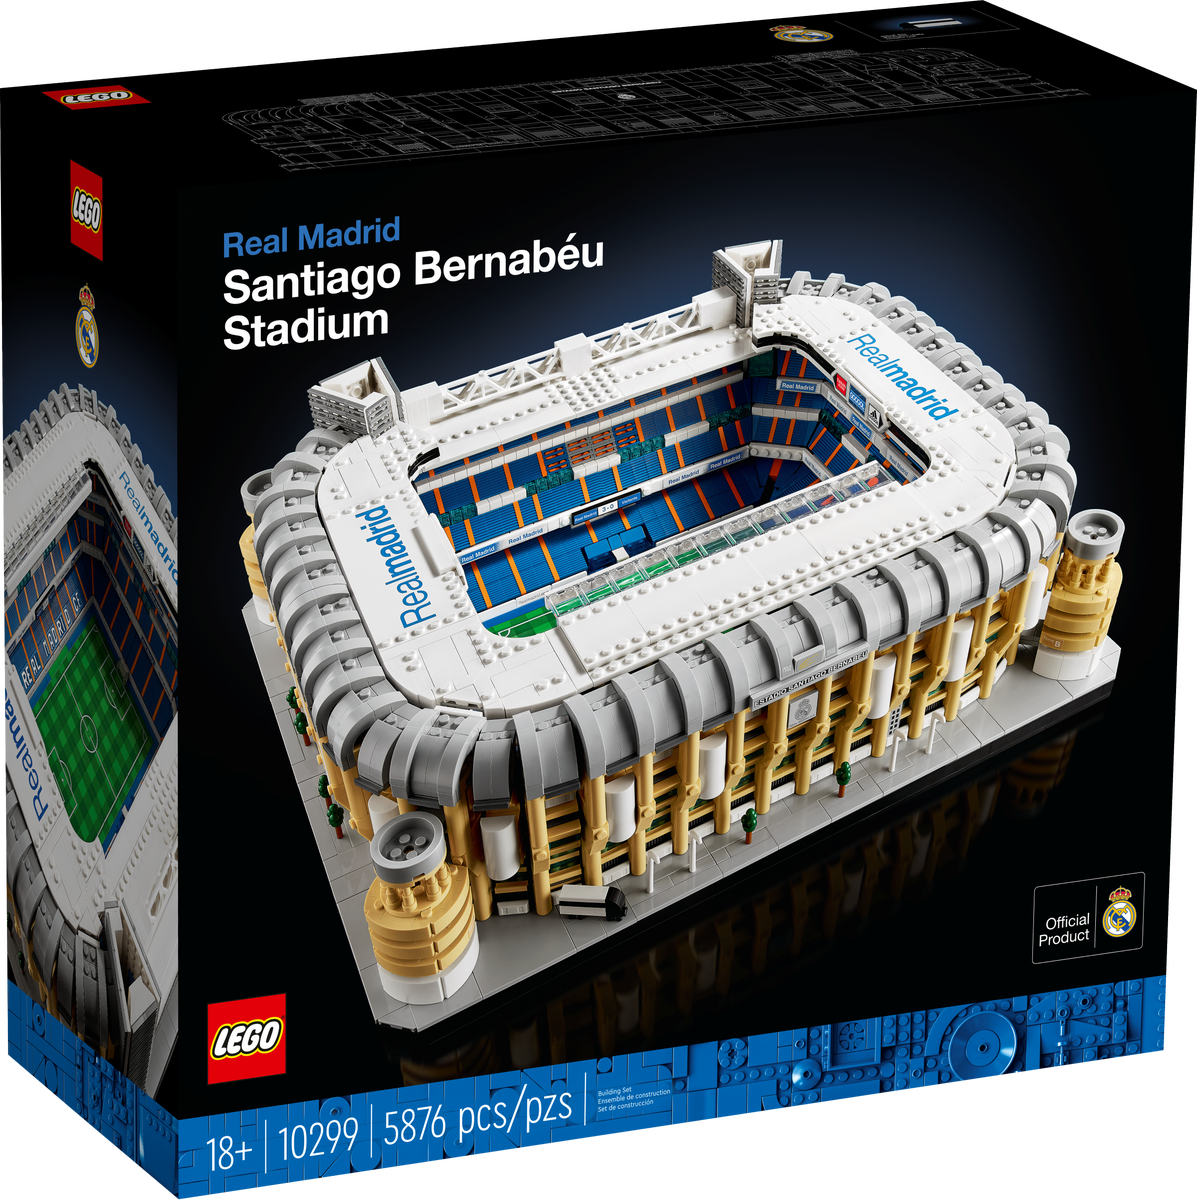 10299: Real Madrid – Santiago Bernabéu Stadium